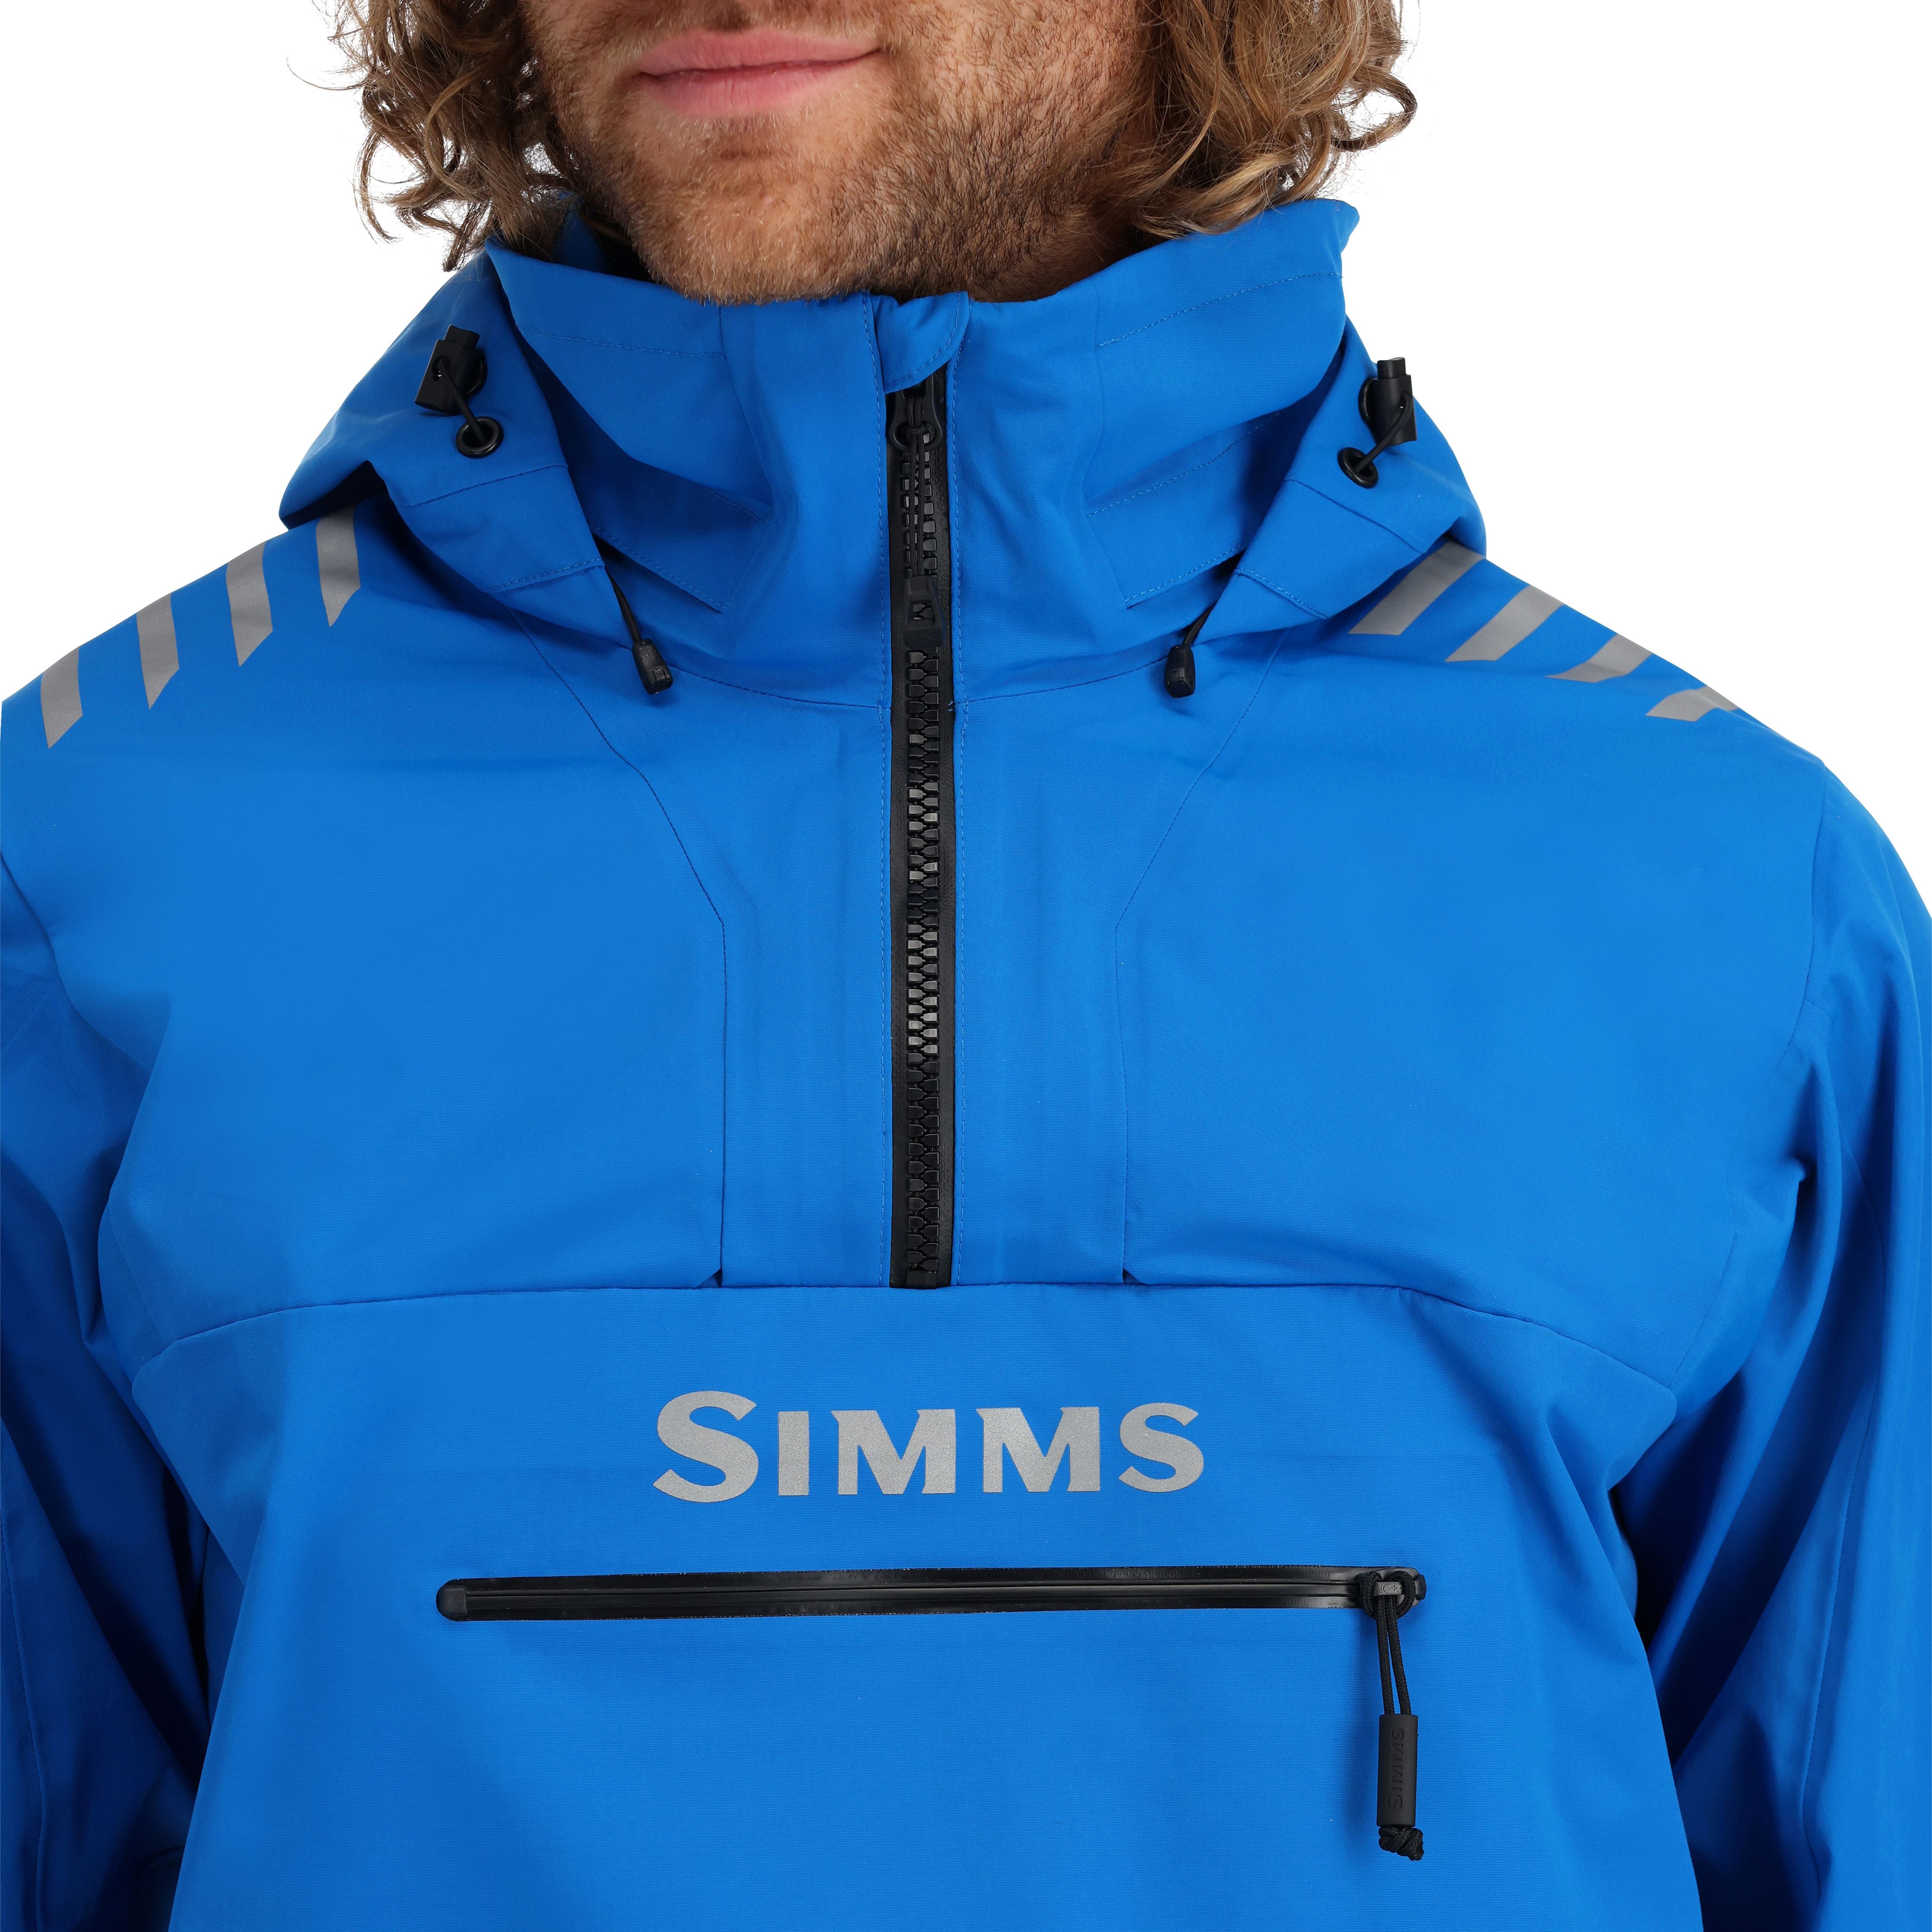 Simms Splash Cast Jacket Bright Blue Image 06